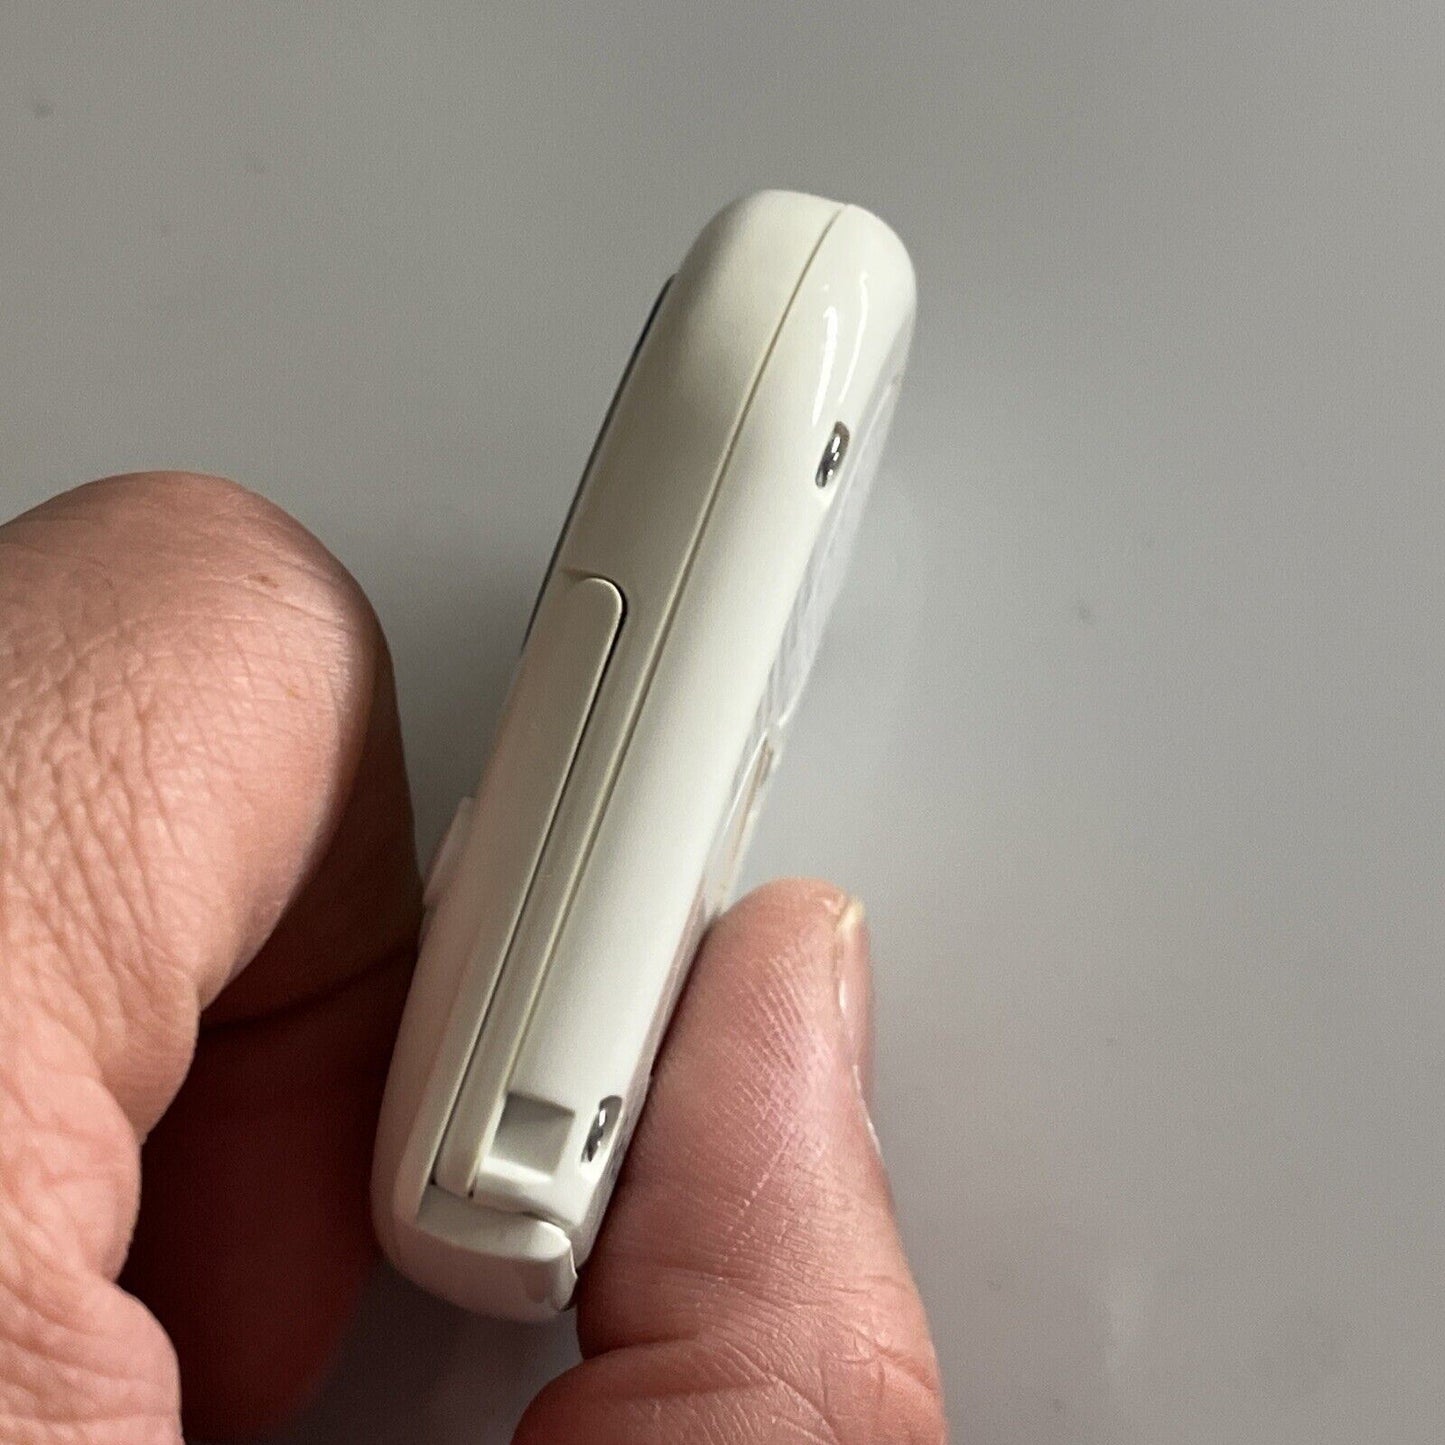 Genuine Official Sony Pocket Station PS1 SCPH-4000 White PocketStation